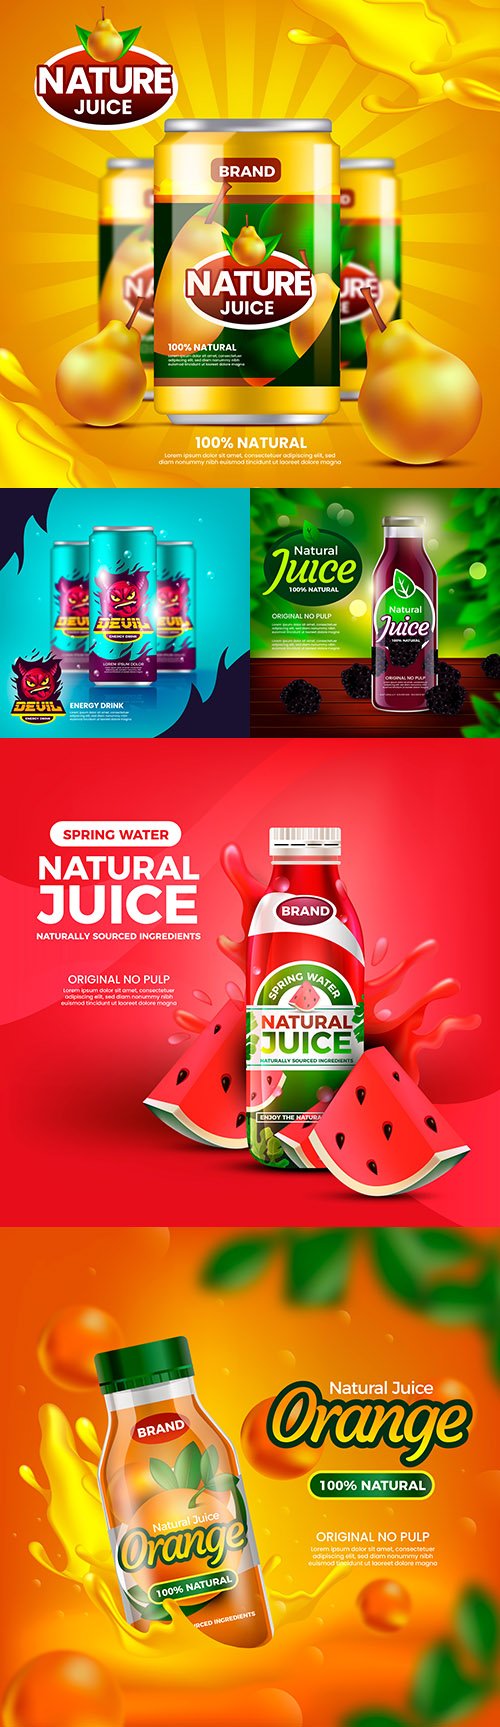 Natural fruit juice and energetic beverage illustration